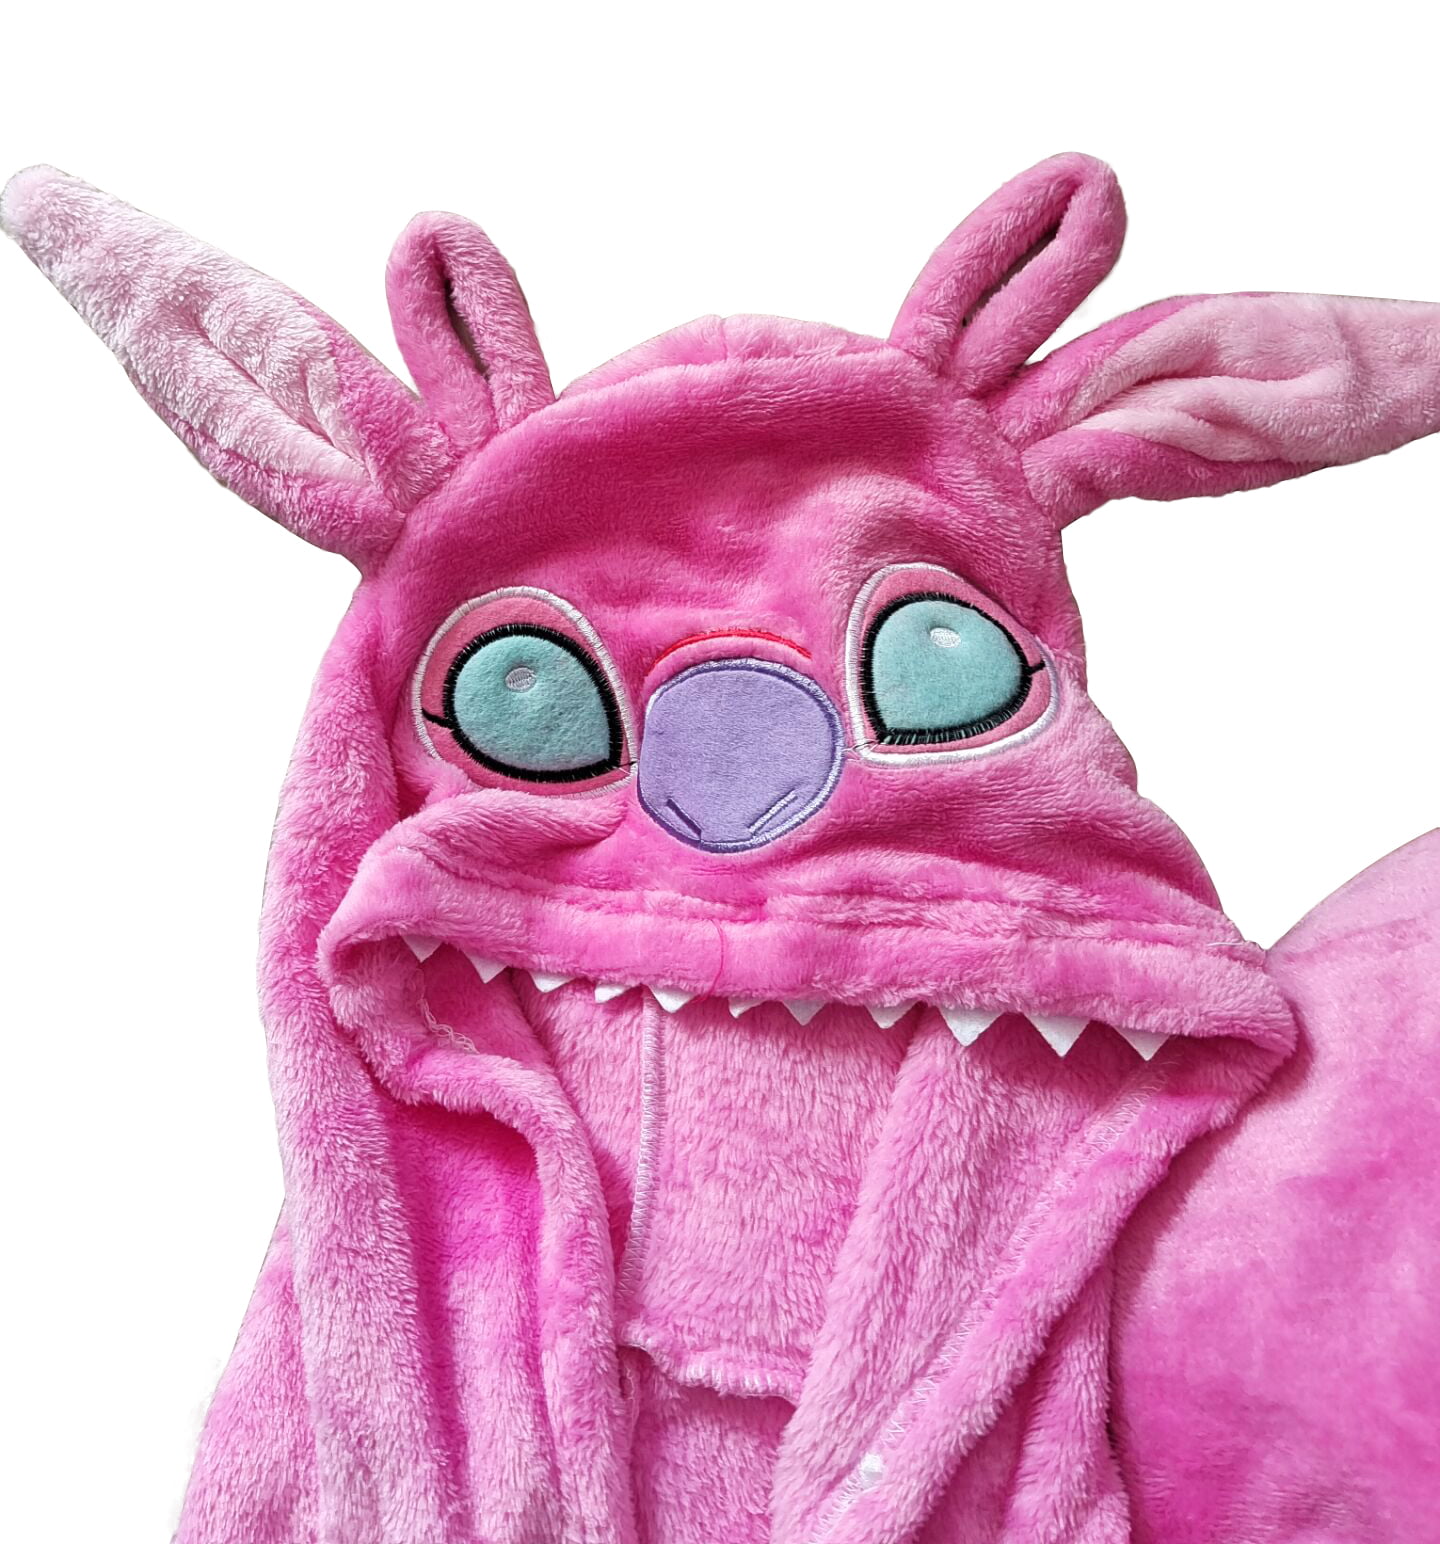 Stitch Costume, Stitch Pink Parent Child Children Home Clothes